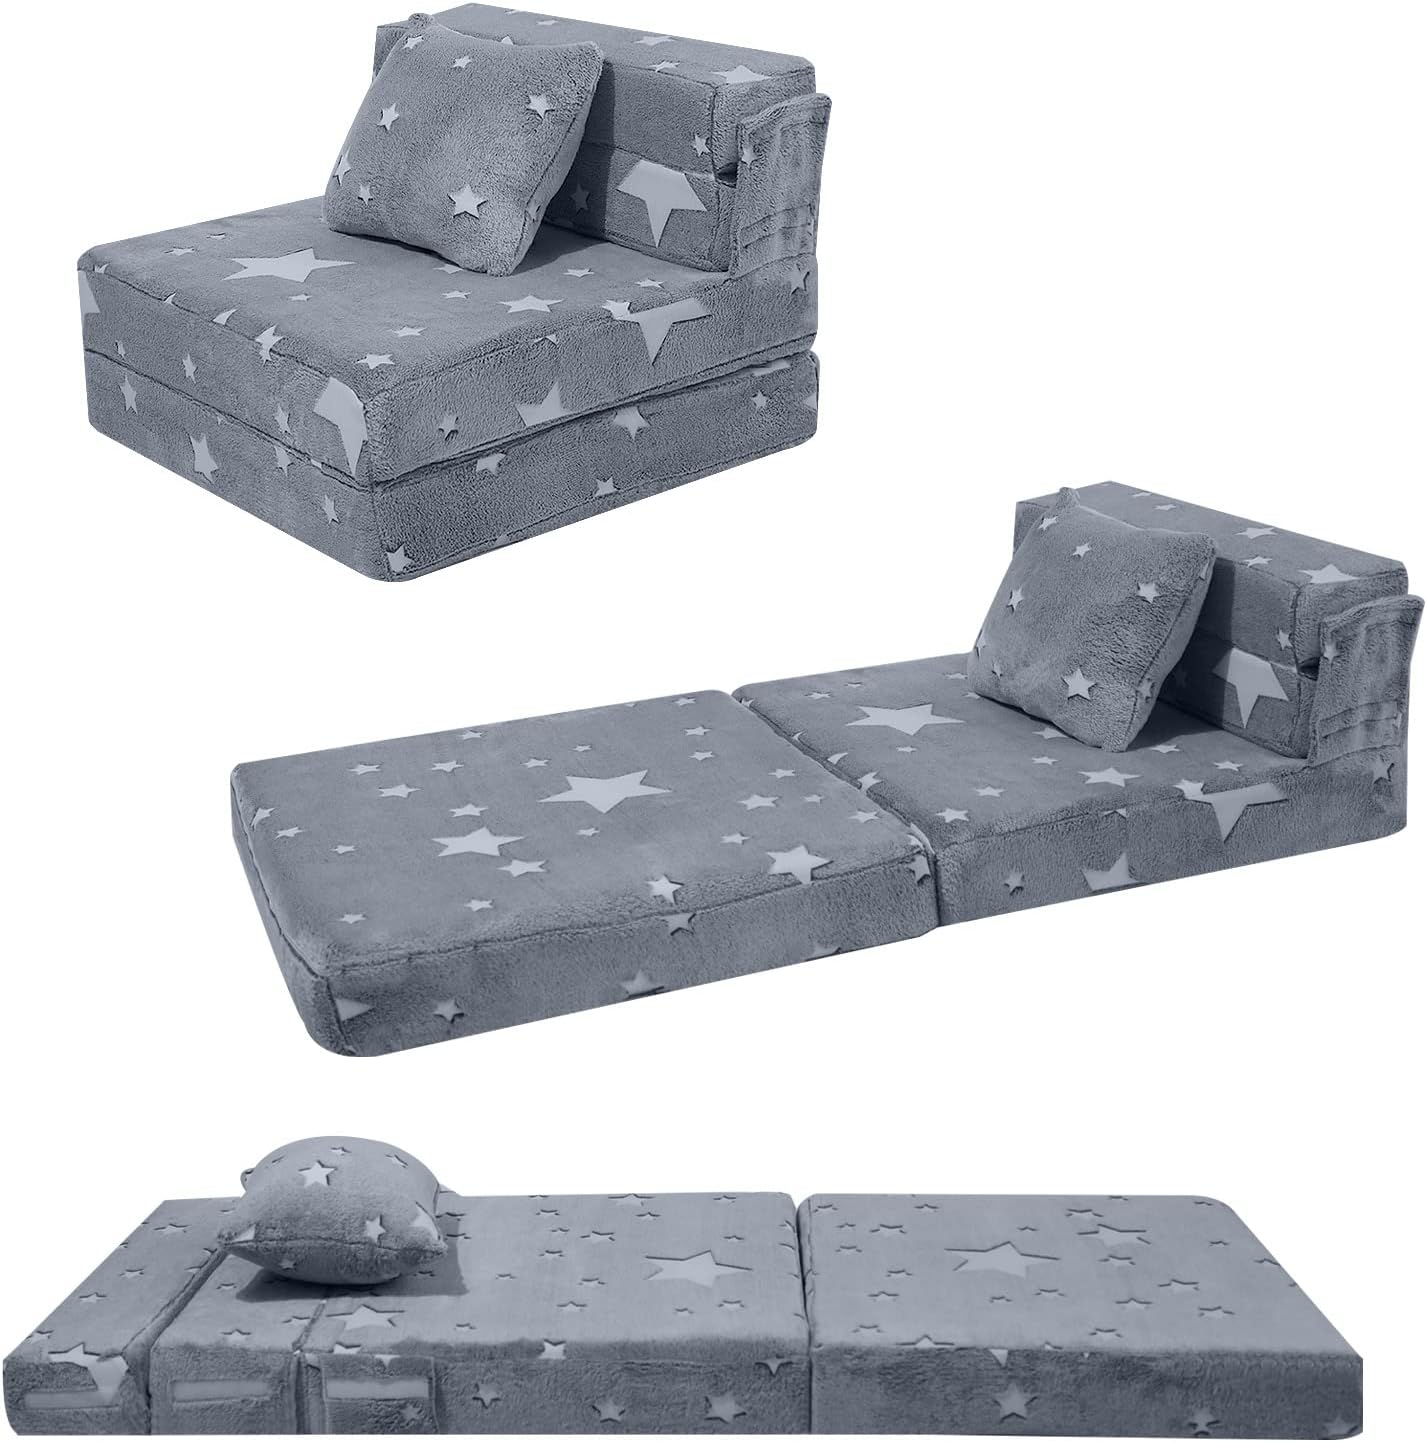 Folding Foam Mattresses, Foldable Chair Beds Lounger, Portable